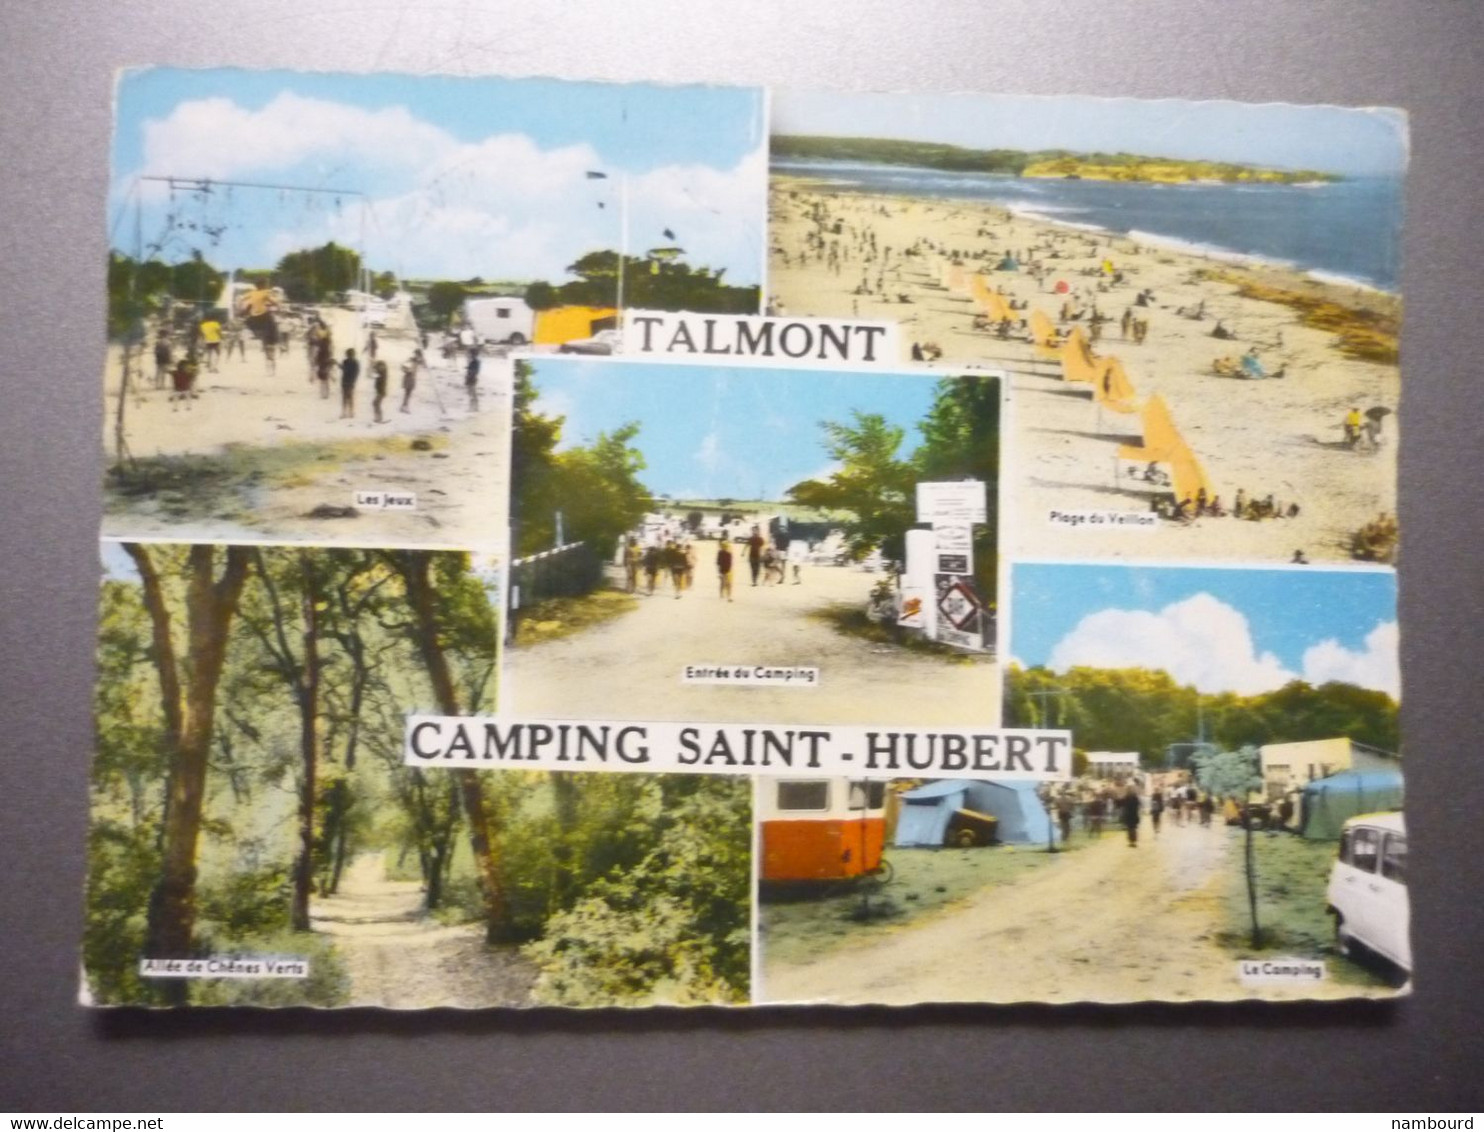 Camping Saint-Hubert - Talmont Saint Hilaire